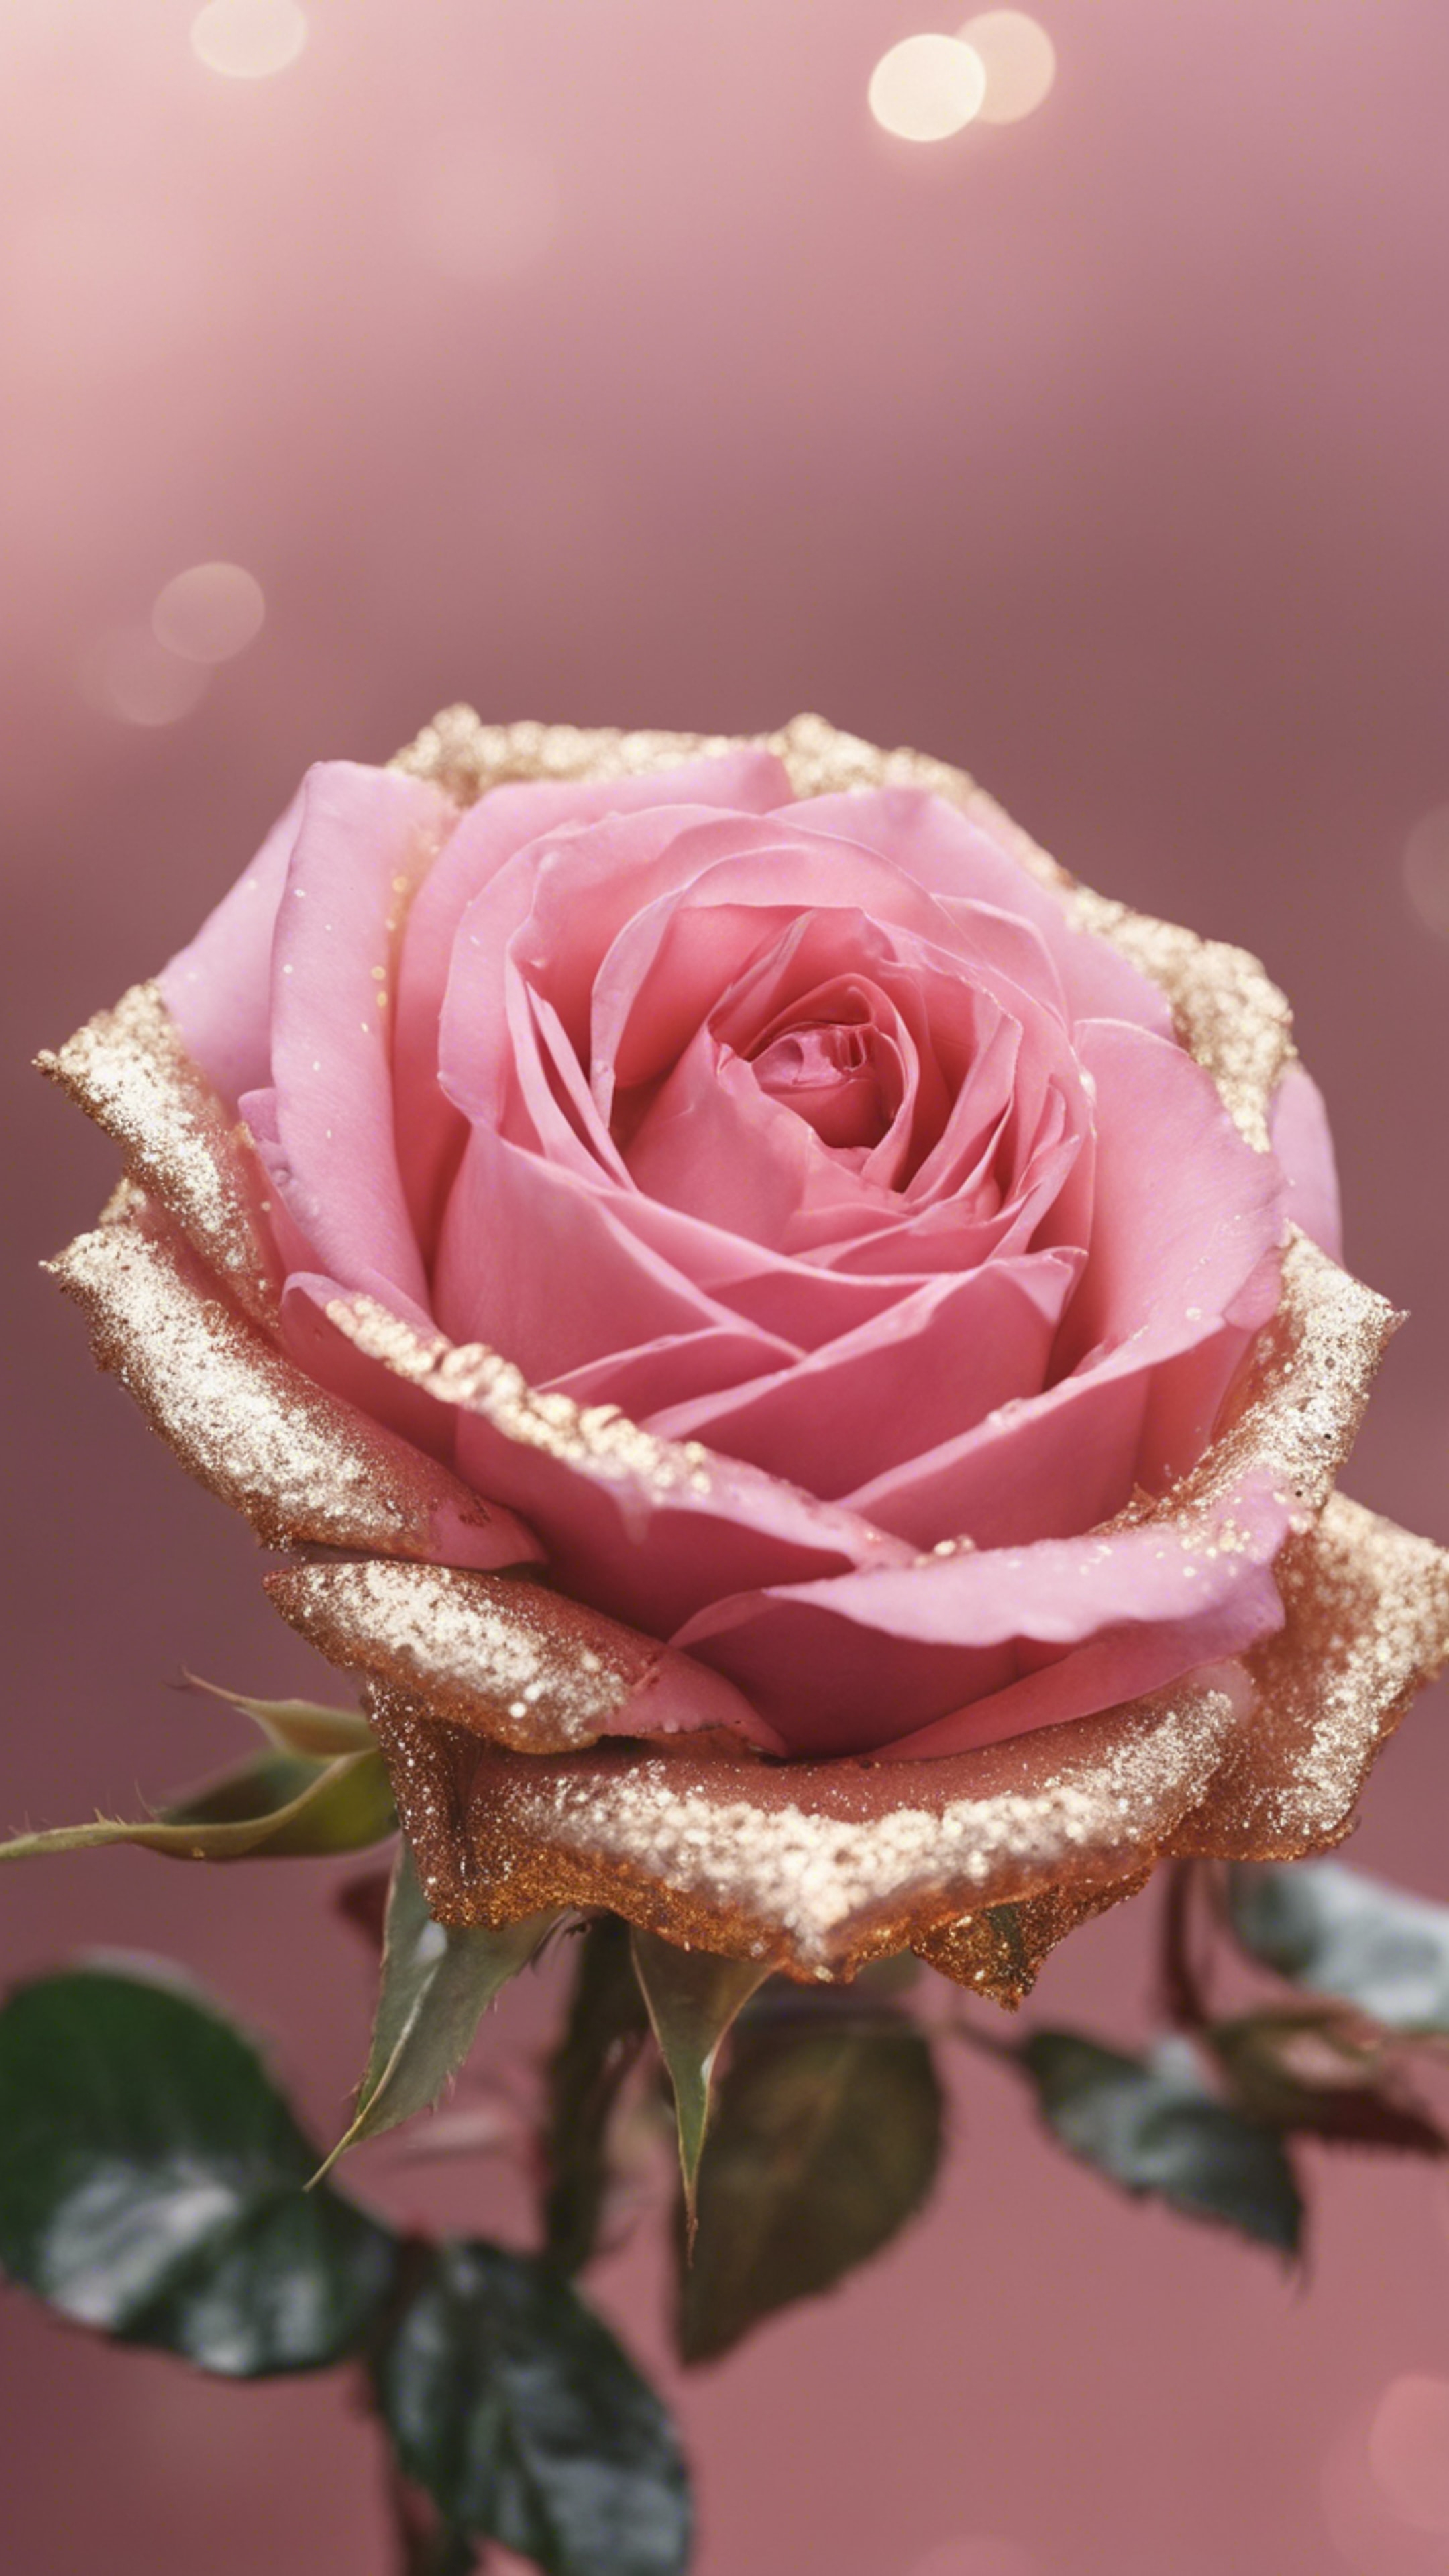 A closeup view of a beautiful pink rose with gold glittered edges. Tapéta[3875274ebd404c0da9bb]